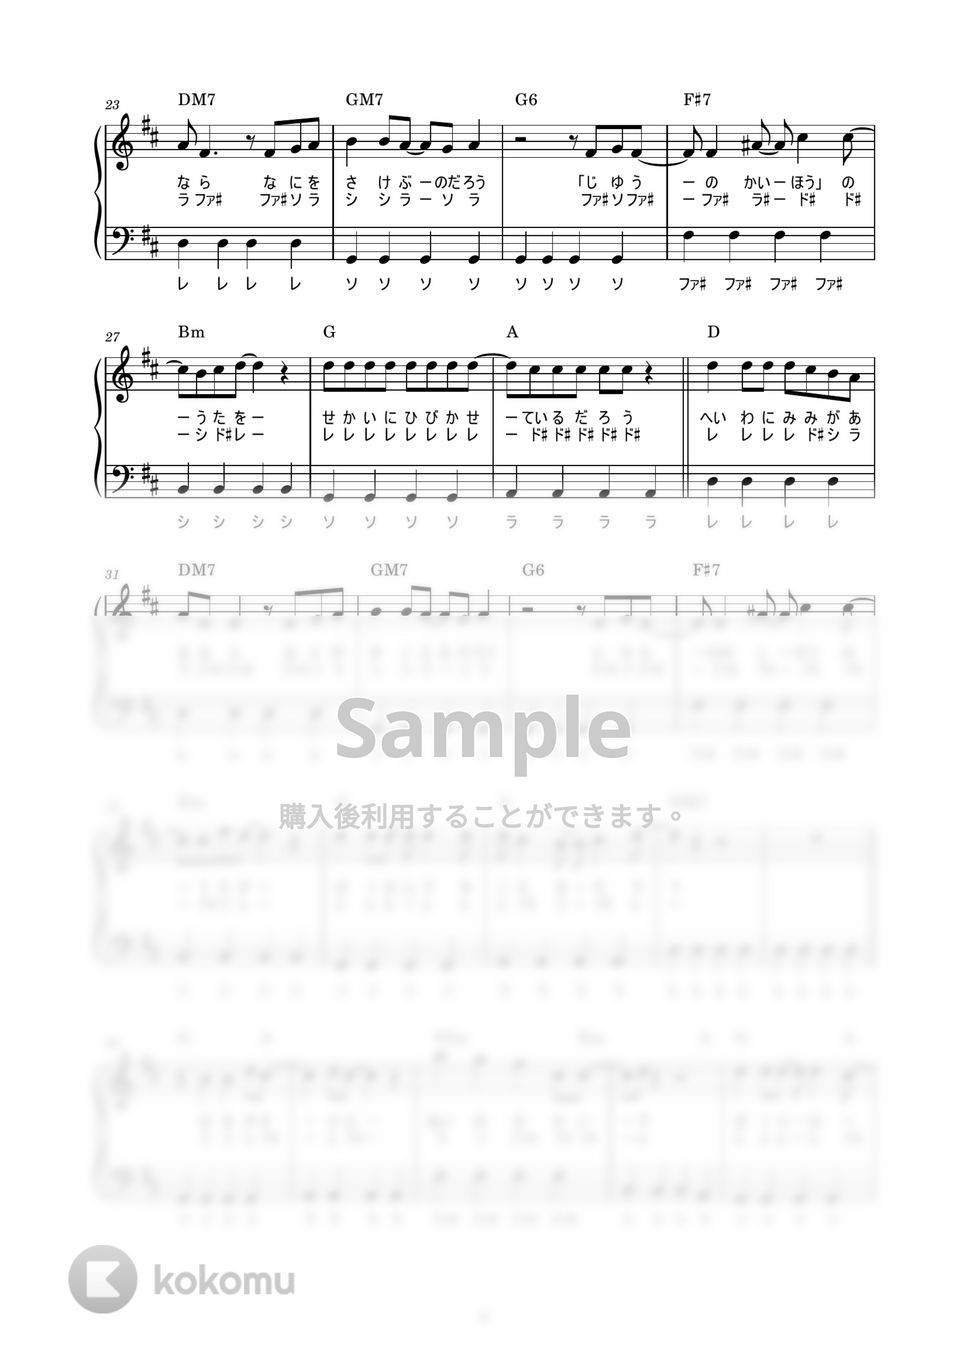 SEKAI NO OWARI - 虹色の戦争 (かんたん / 歌詞付き / ドレミ付き / 初心者) by piano.tokyo